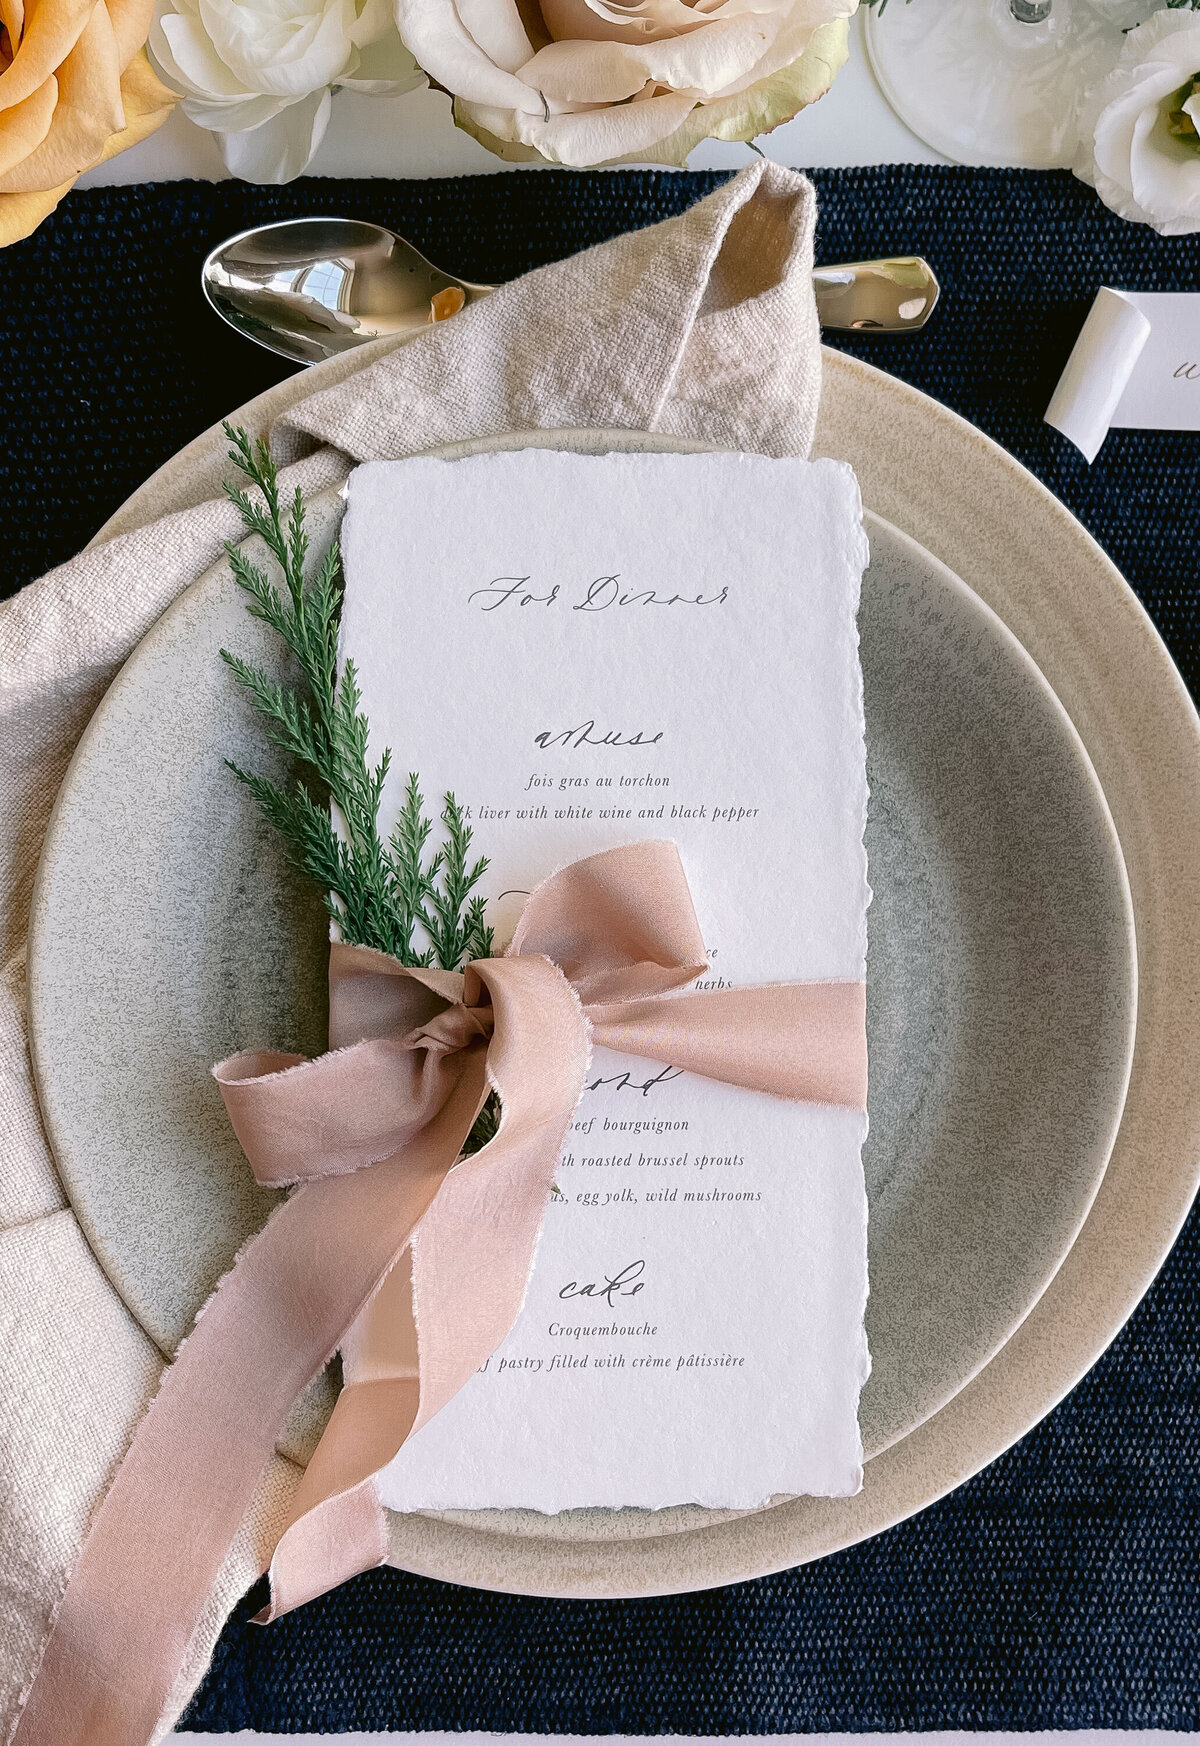 Handmade paper menu with custom calligraphy and a silk ribbon